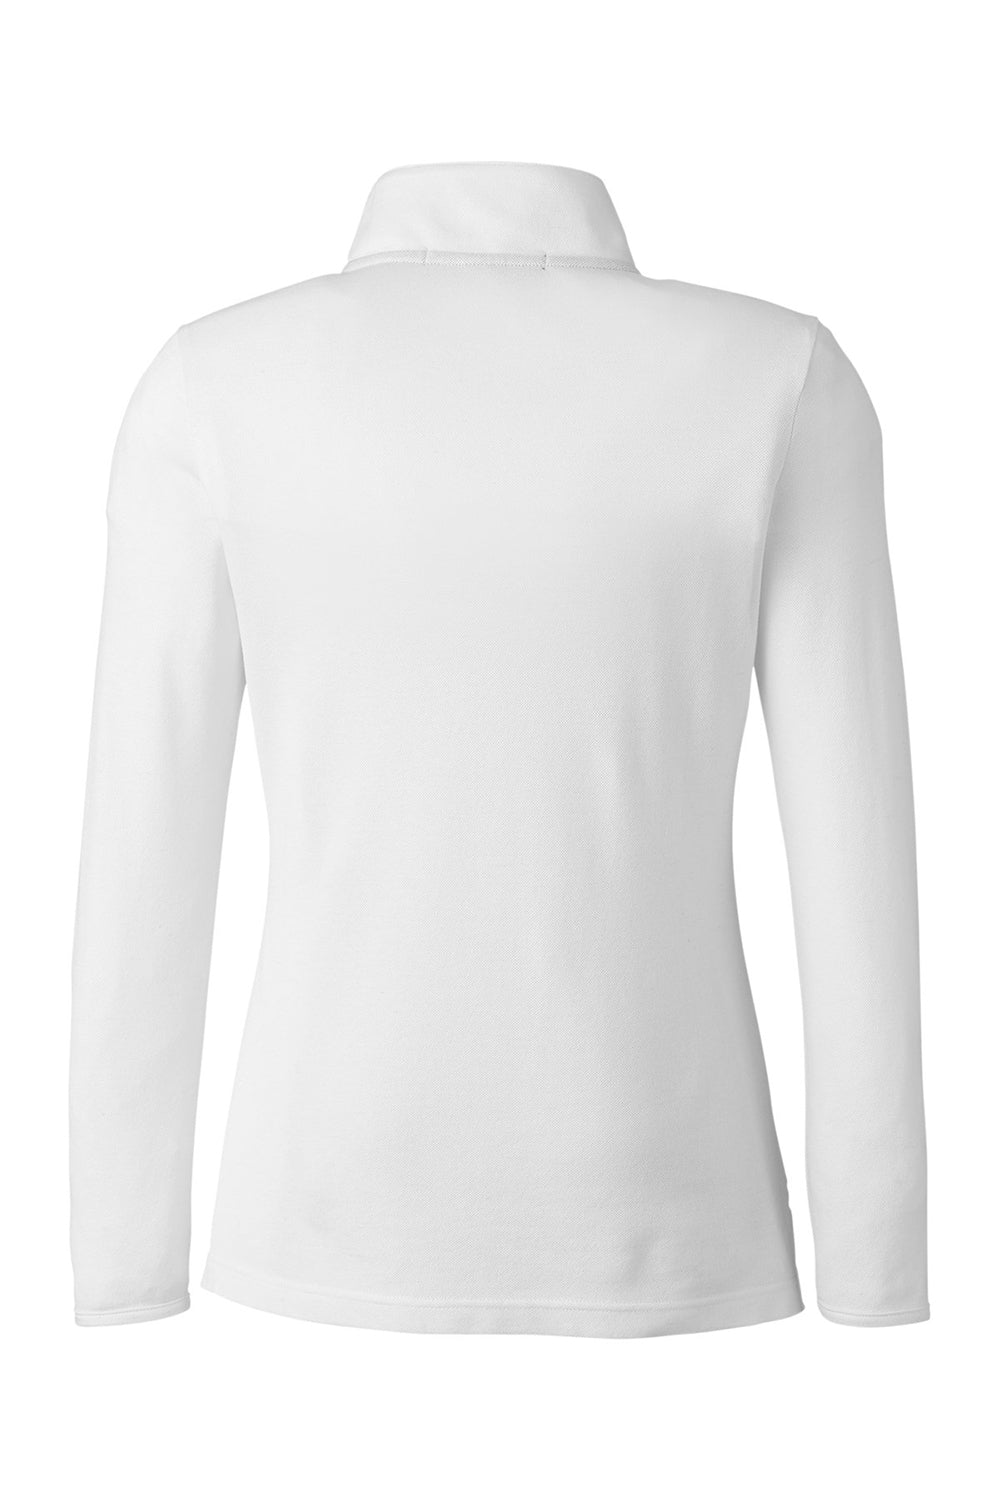 Devon & Jones DG400W Womens New Classics Performance Moisture Wicking 1/4 Zip Sweatshirt White Flat Back